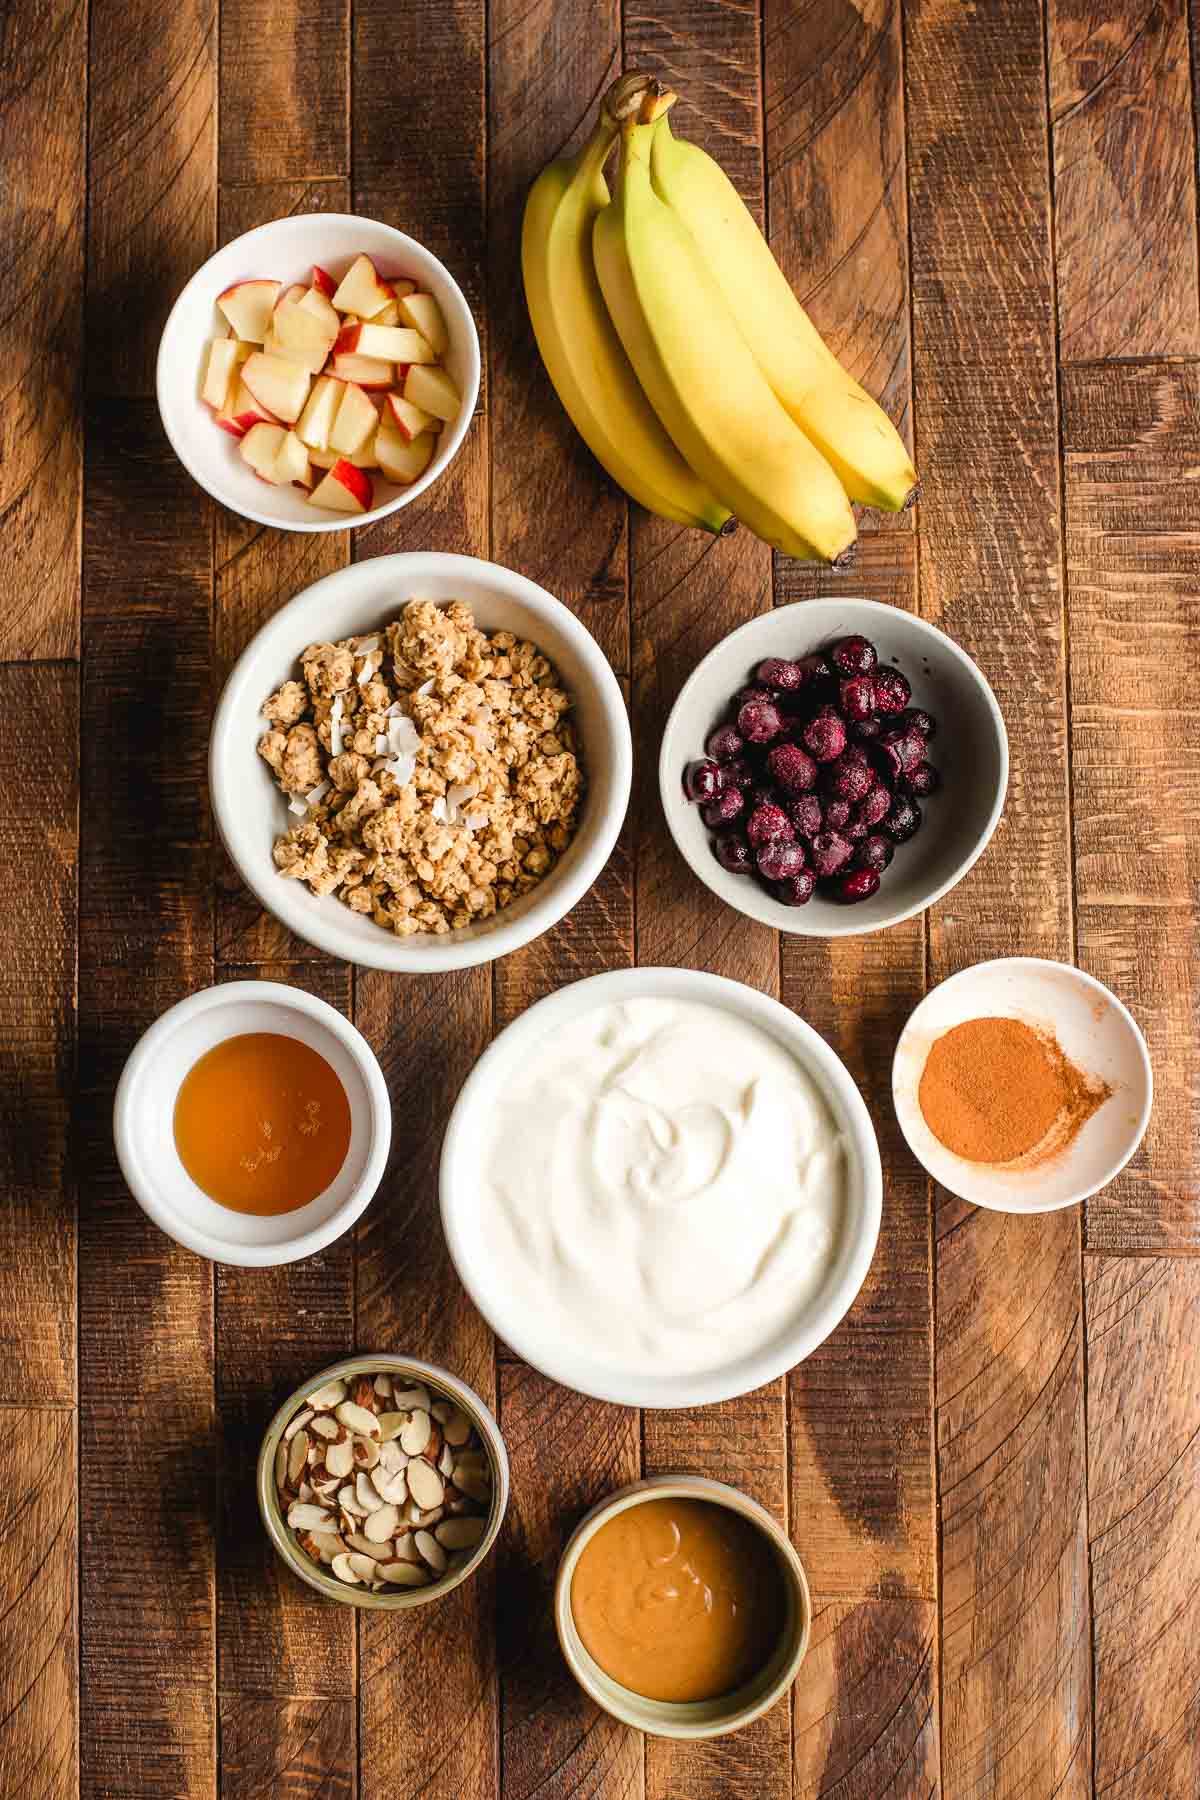 Bowls of yogurt, bananas, blueberries, apples, cinnamon, almonds, granola, and honey arranged on a wooden board.